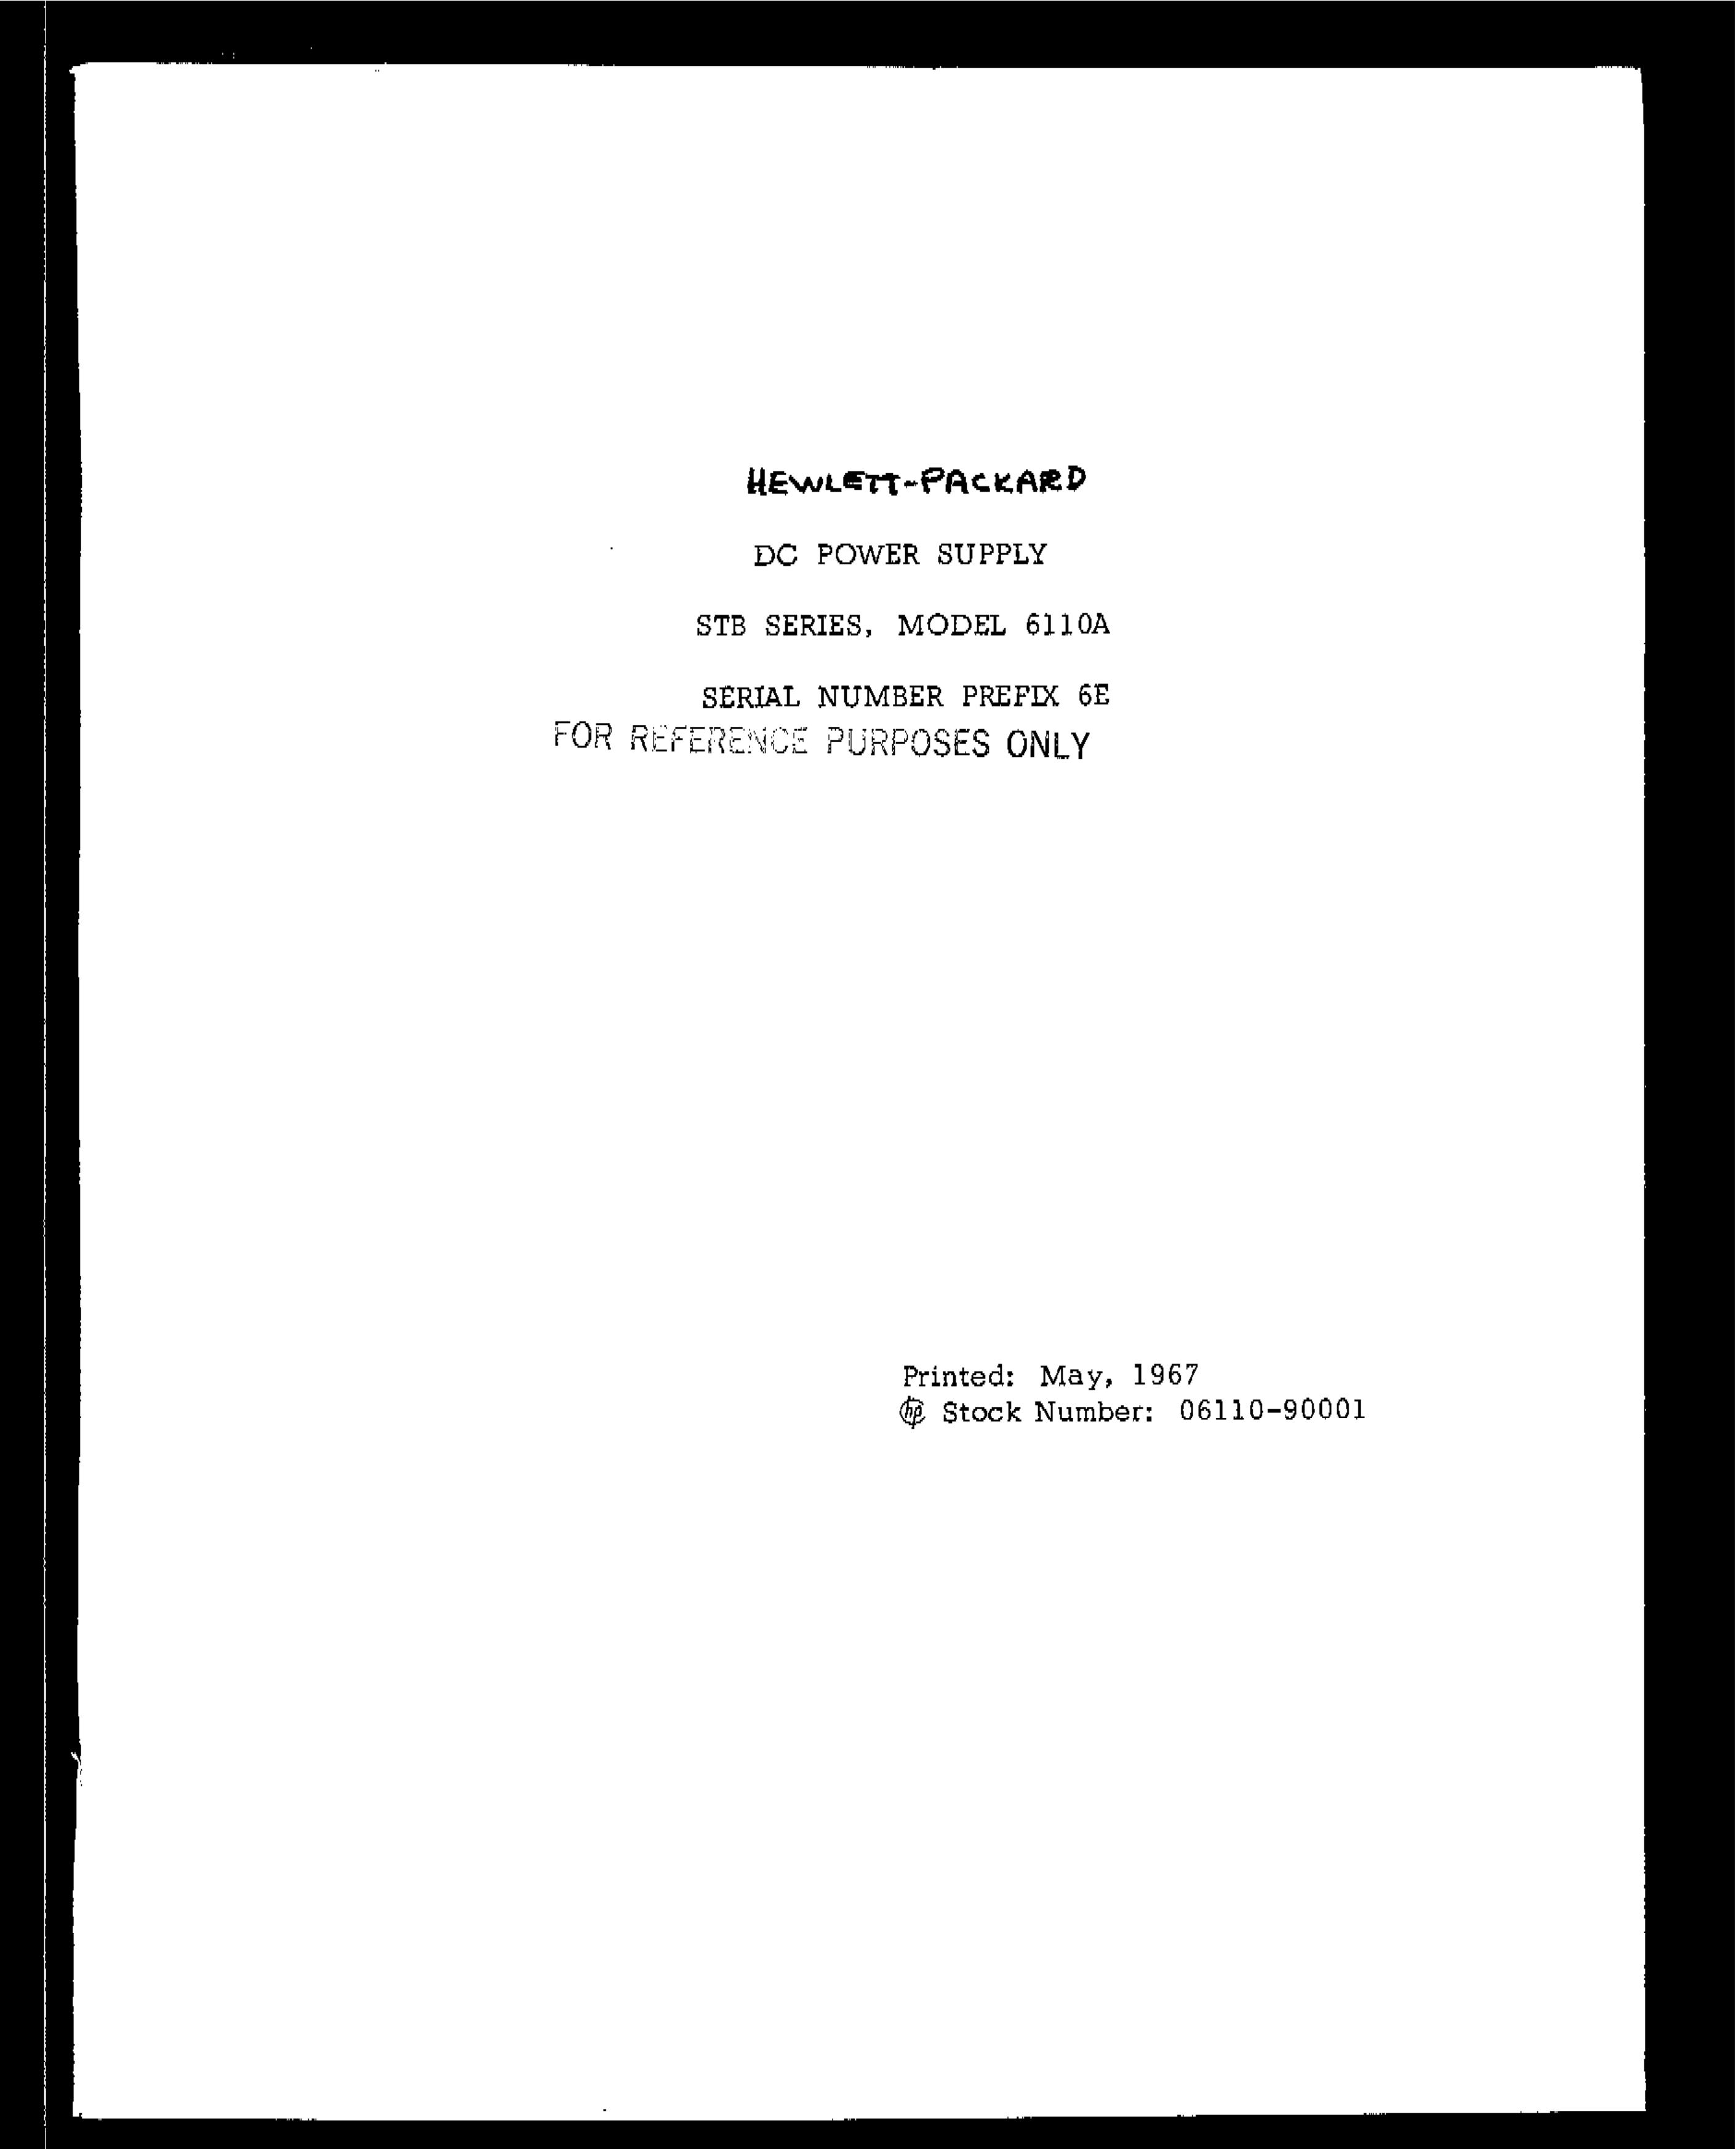 HP (Hewlett-Packard) 6lIOA Portable Generator User Manual